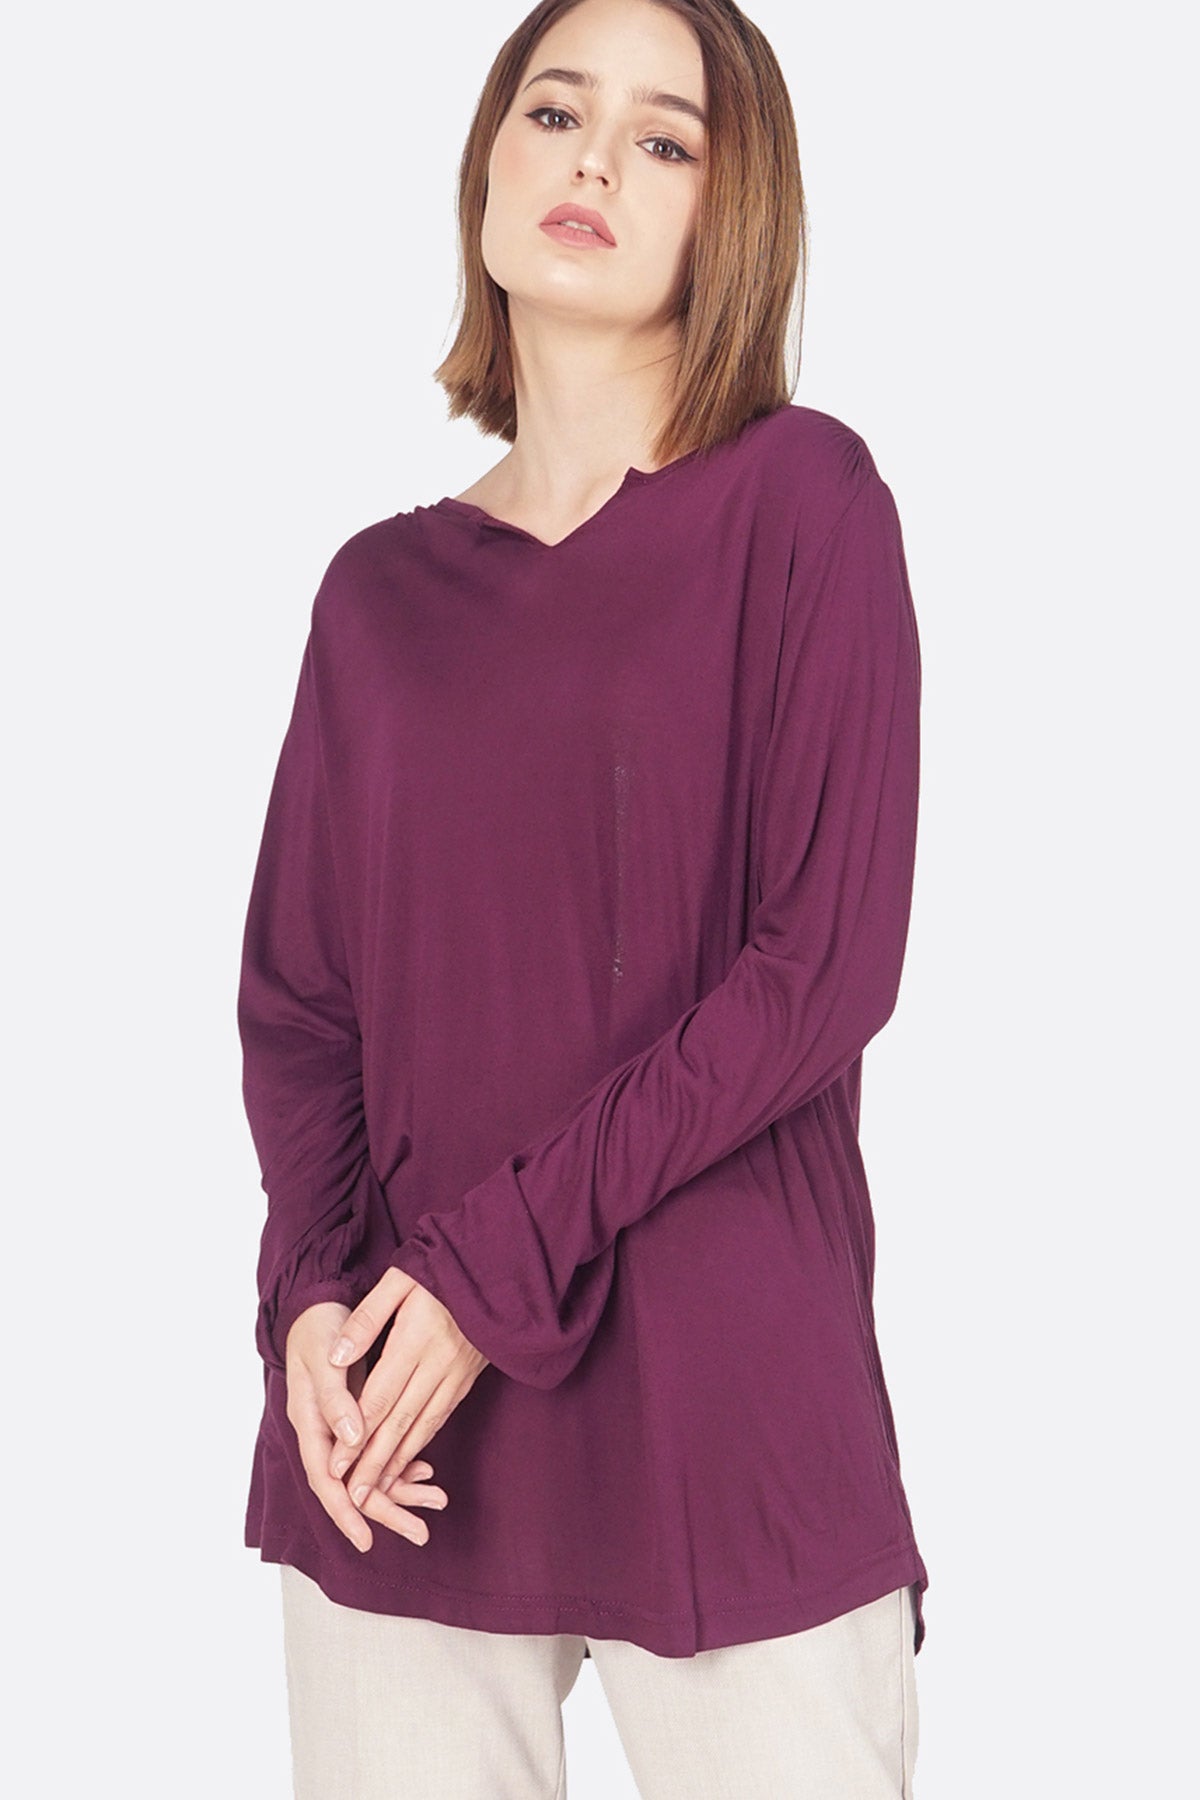 T-Shirt Lengan Panjang Fussion Purple